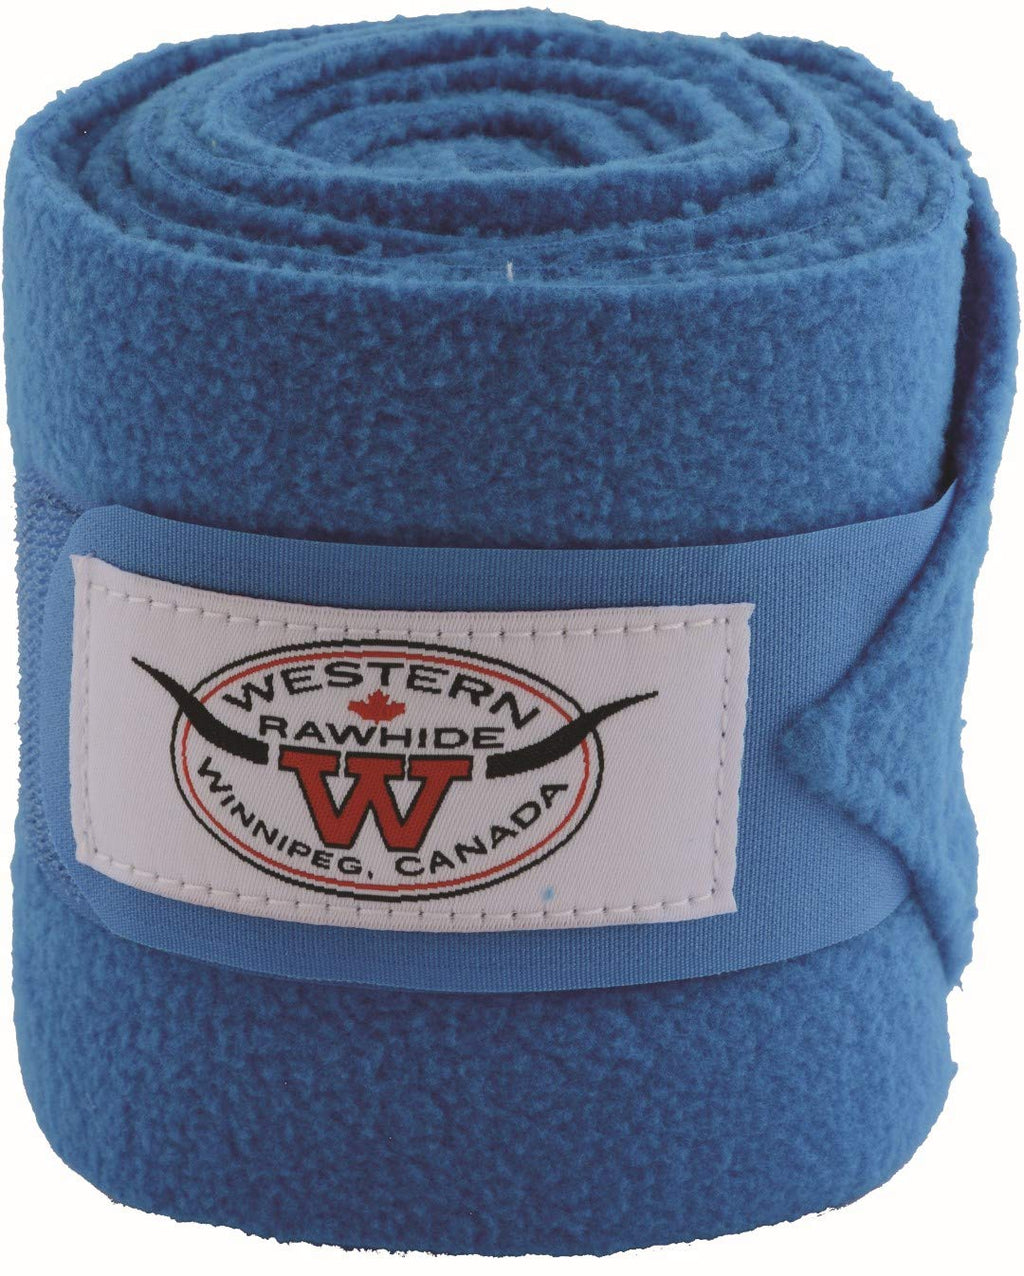 Western Rawhide & Harness Mfg, Ltd. Anti-Pilling Polo Wraps 4in x 9ft Baby Blue - PawsPlanet Australia